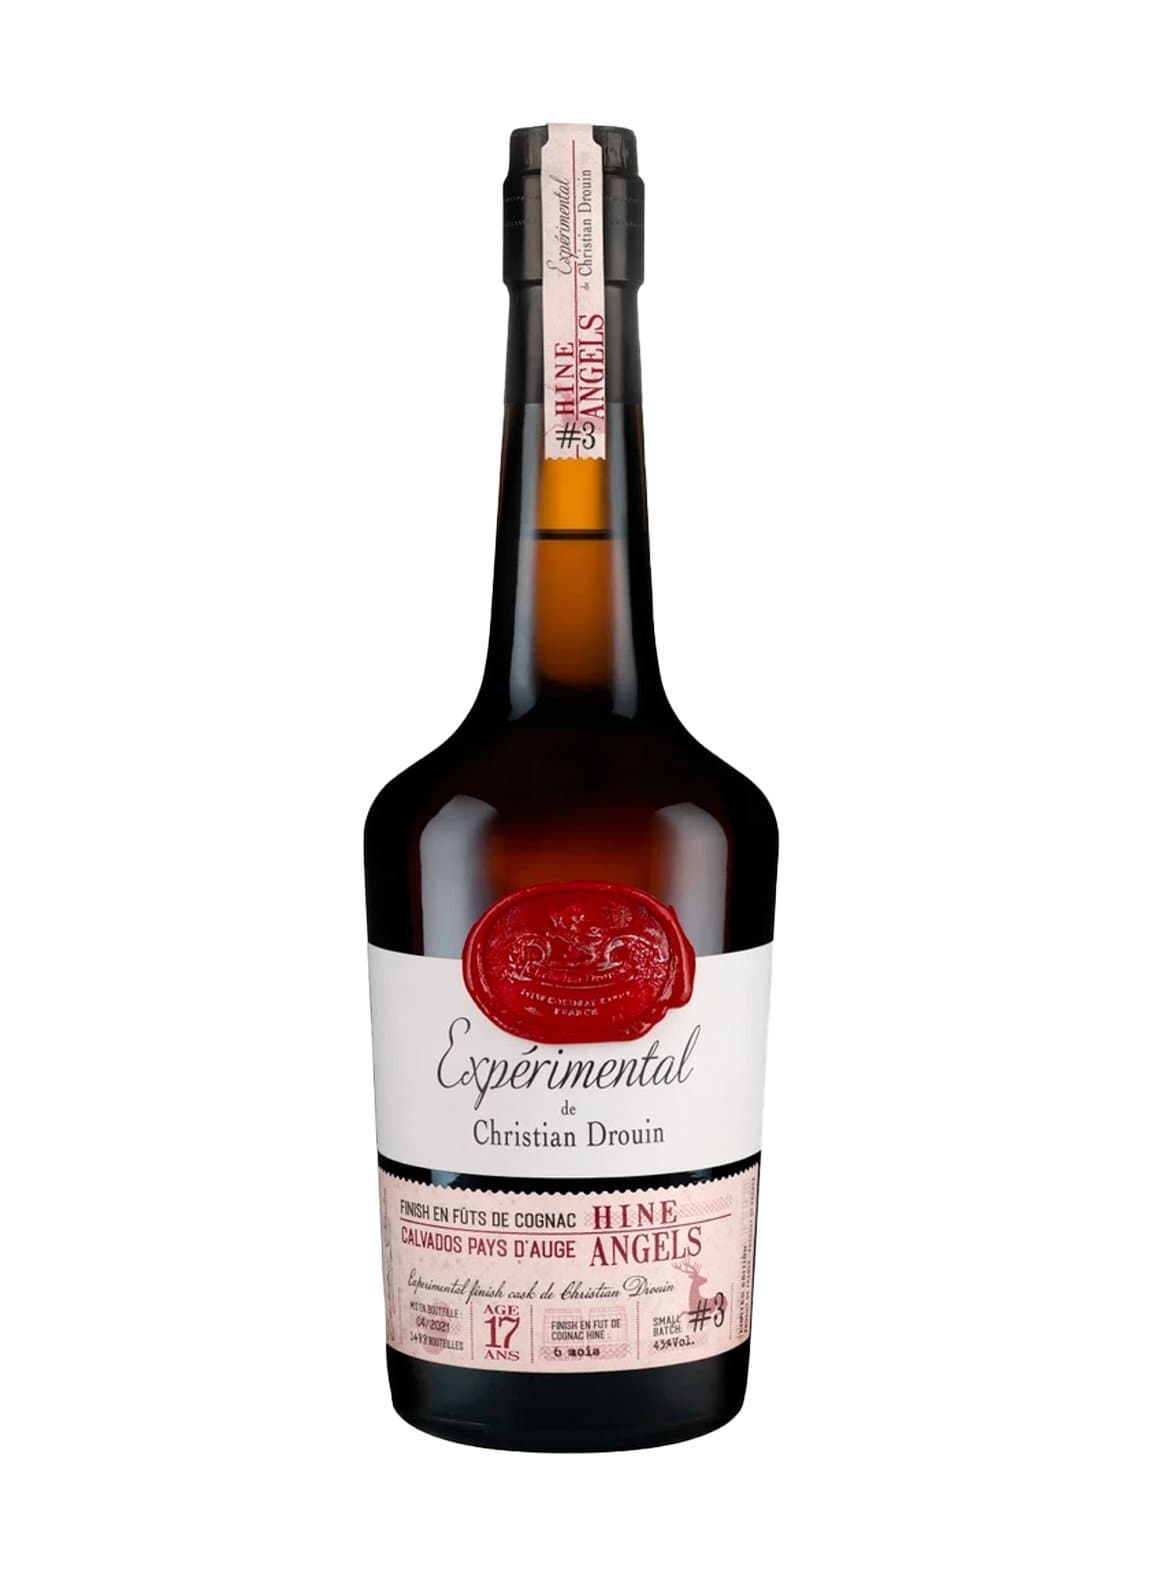 Christian Drouin Calvados Hine Cognac casks 43% 700ml | Brandy | Shop online at Spirits of France